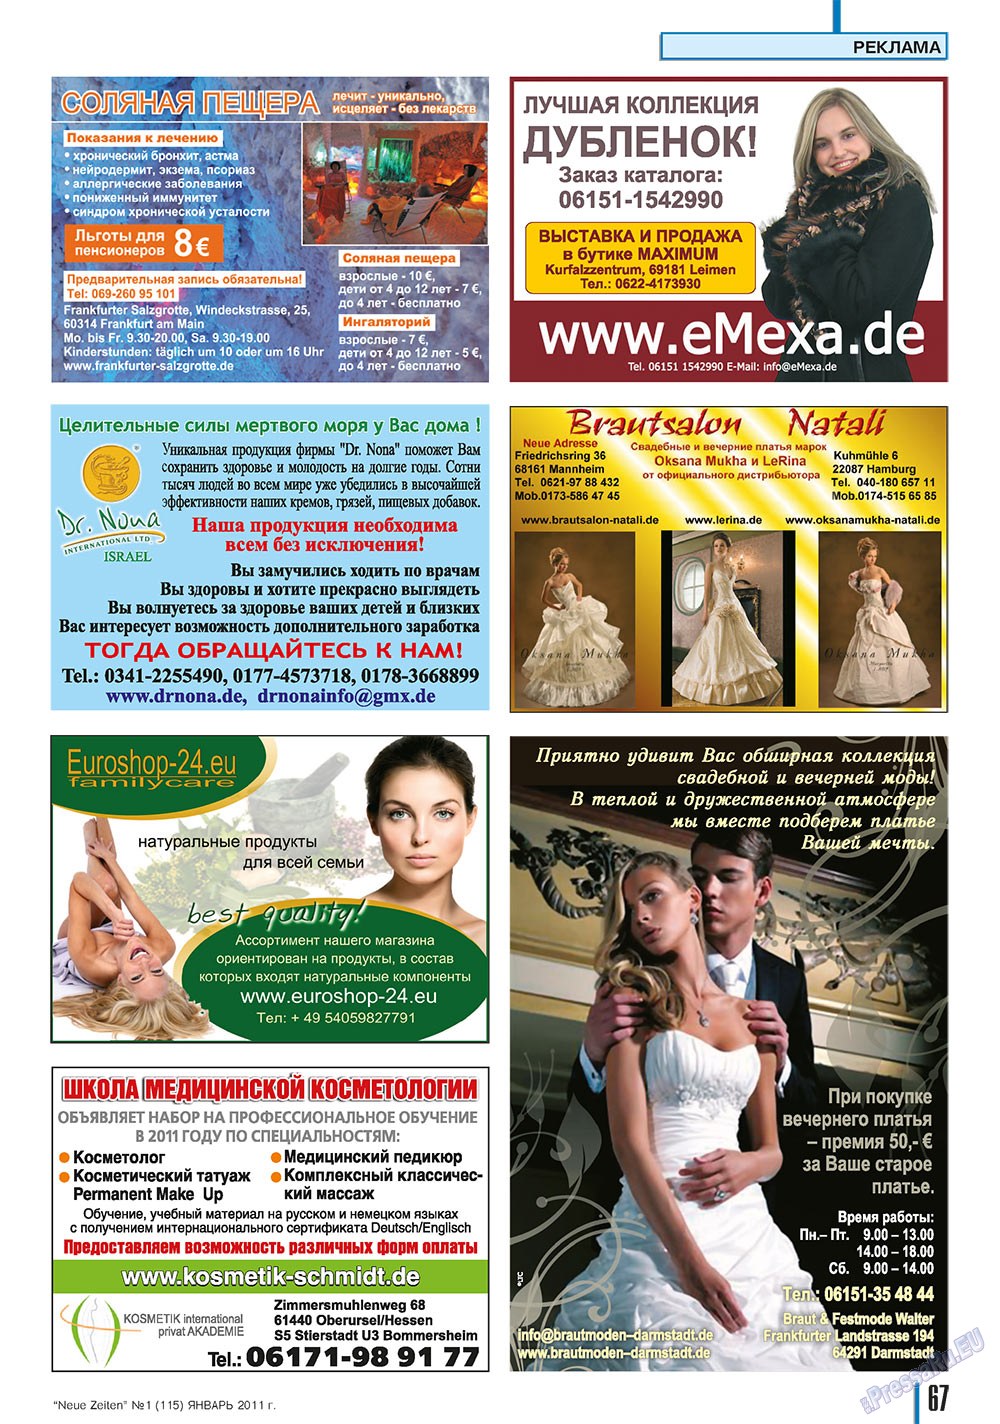 Neue Zeiten (журнал). 2011 год, номер 1, стр. 69